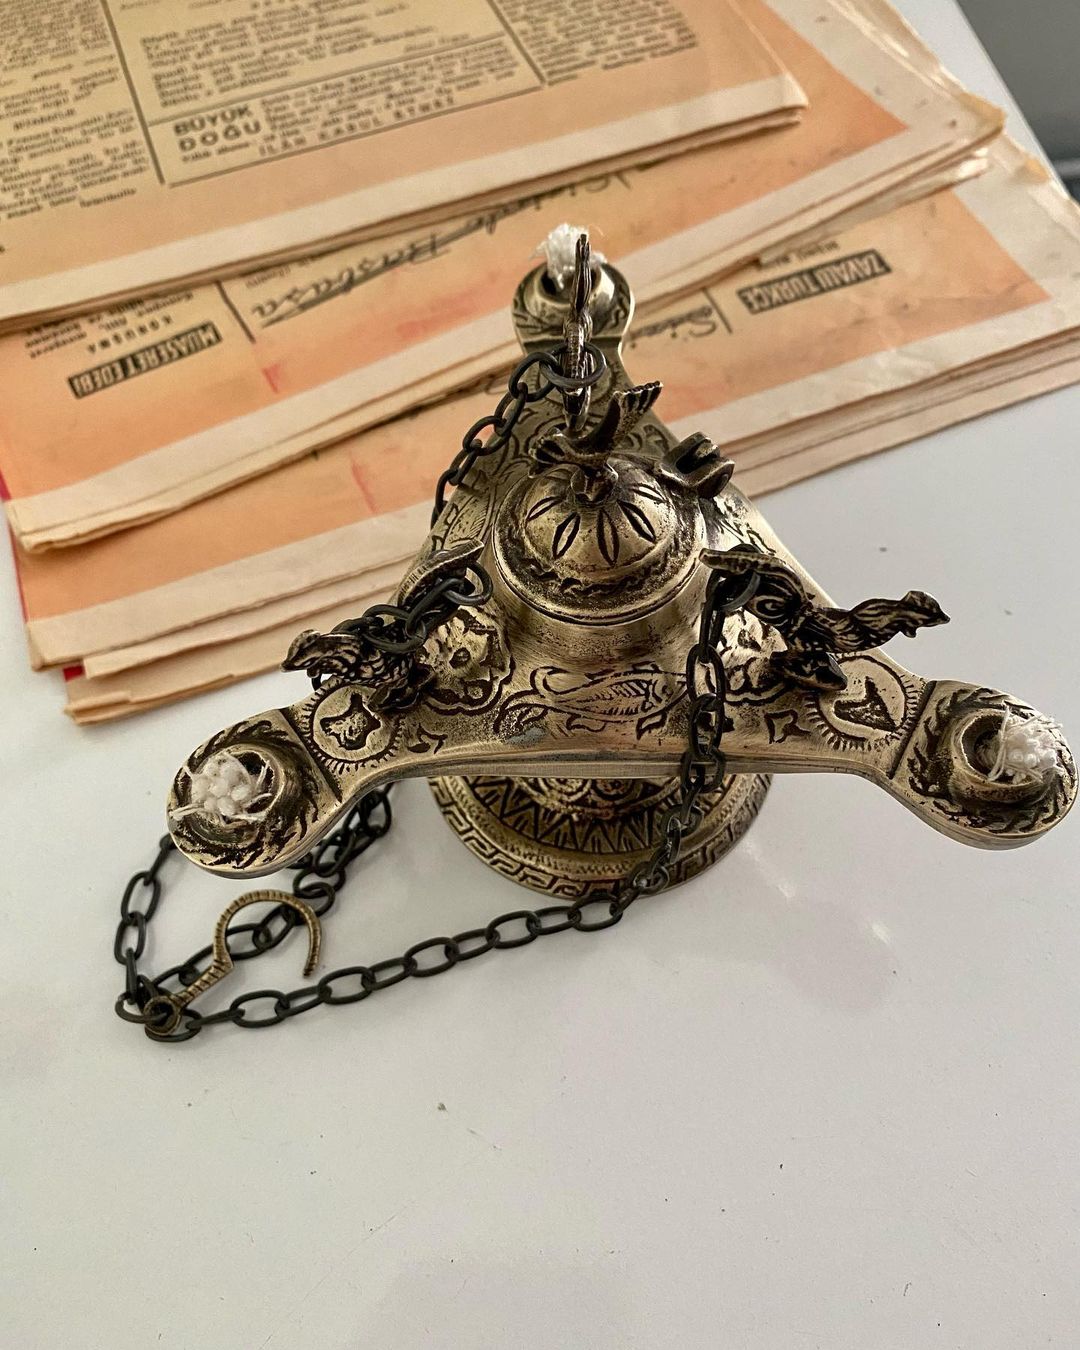 Antique Brass Oil Lamp